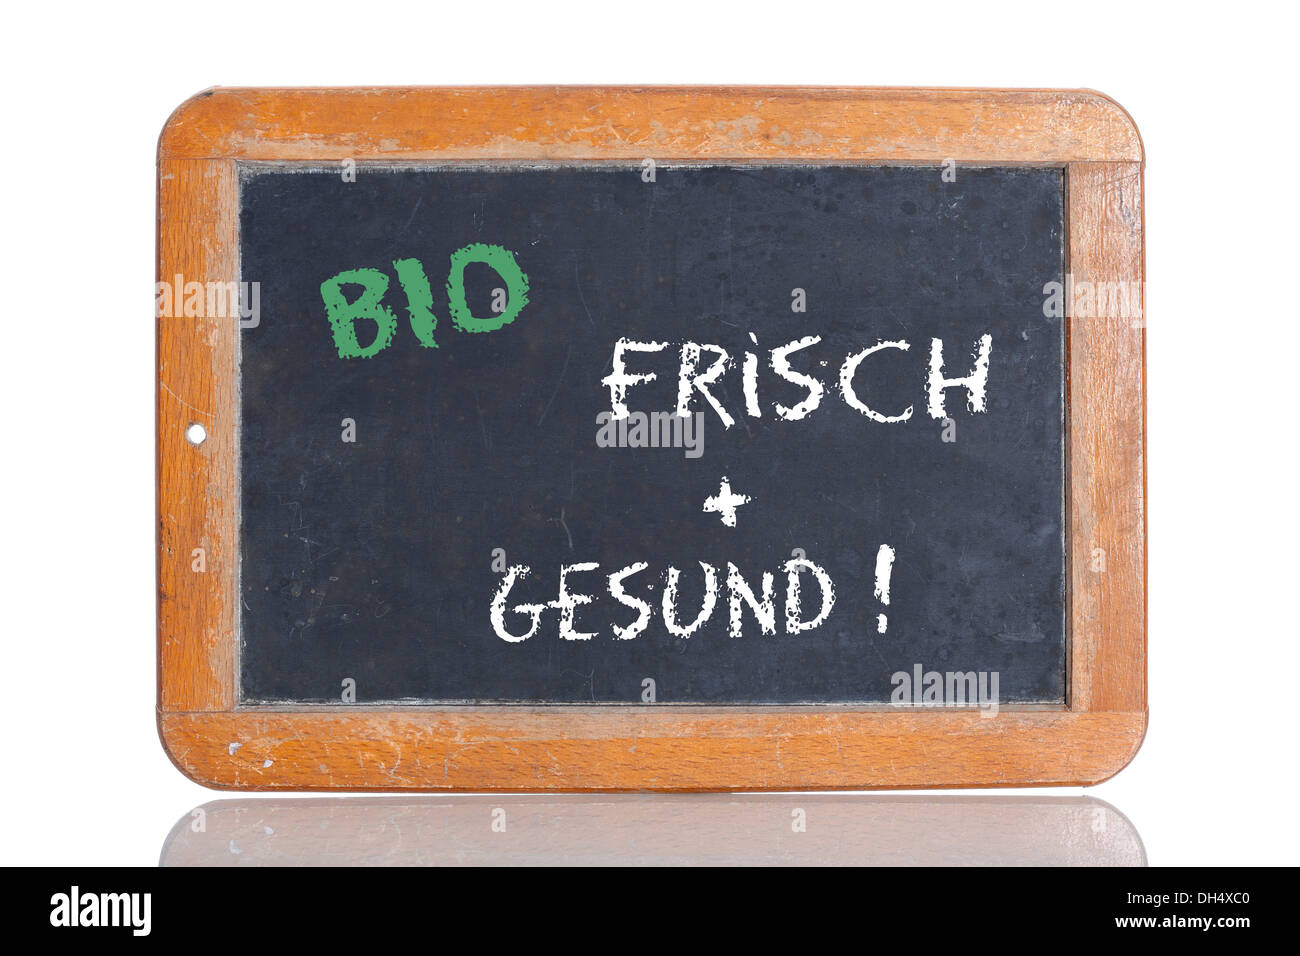 Old school blackboard with the words BIO - FRISCH + GESUND!, German for Organic - fresh + healthy! Stock Photo